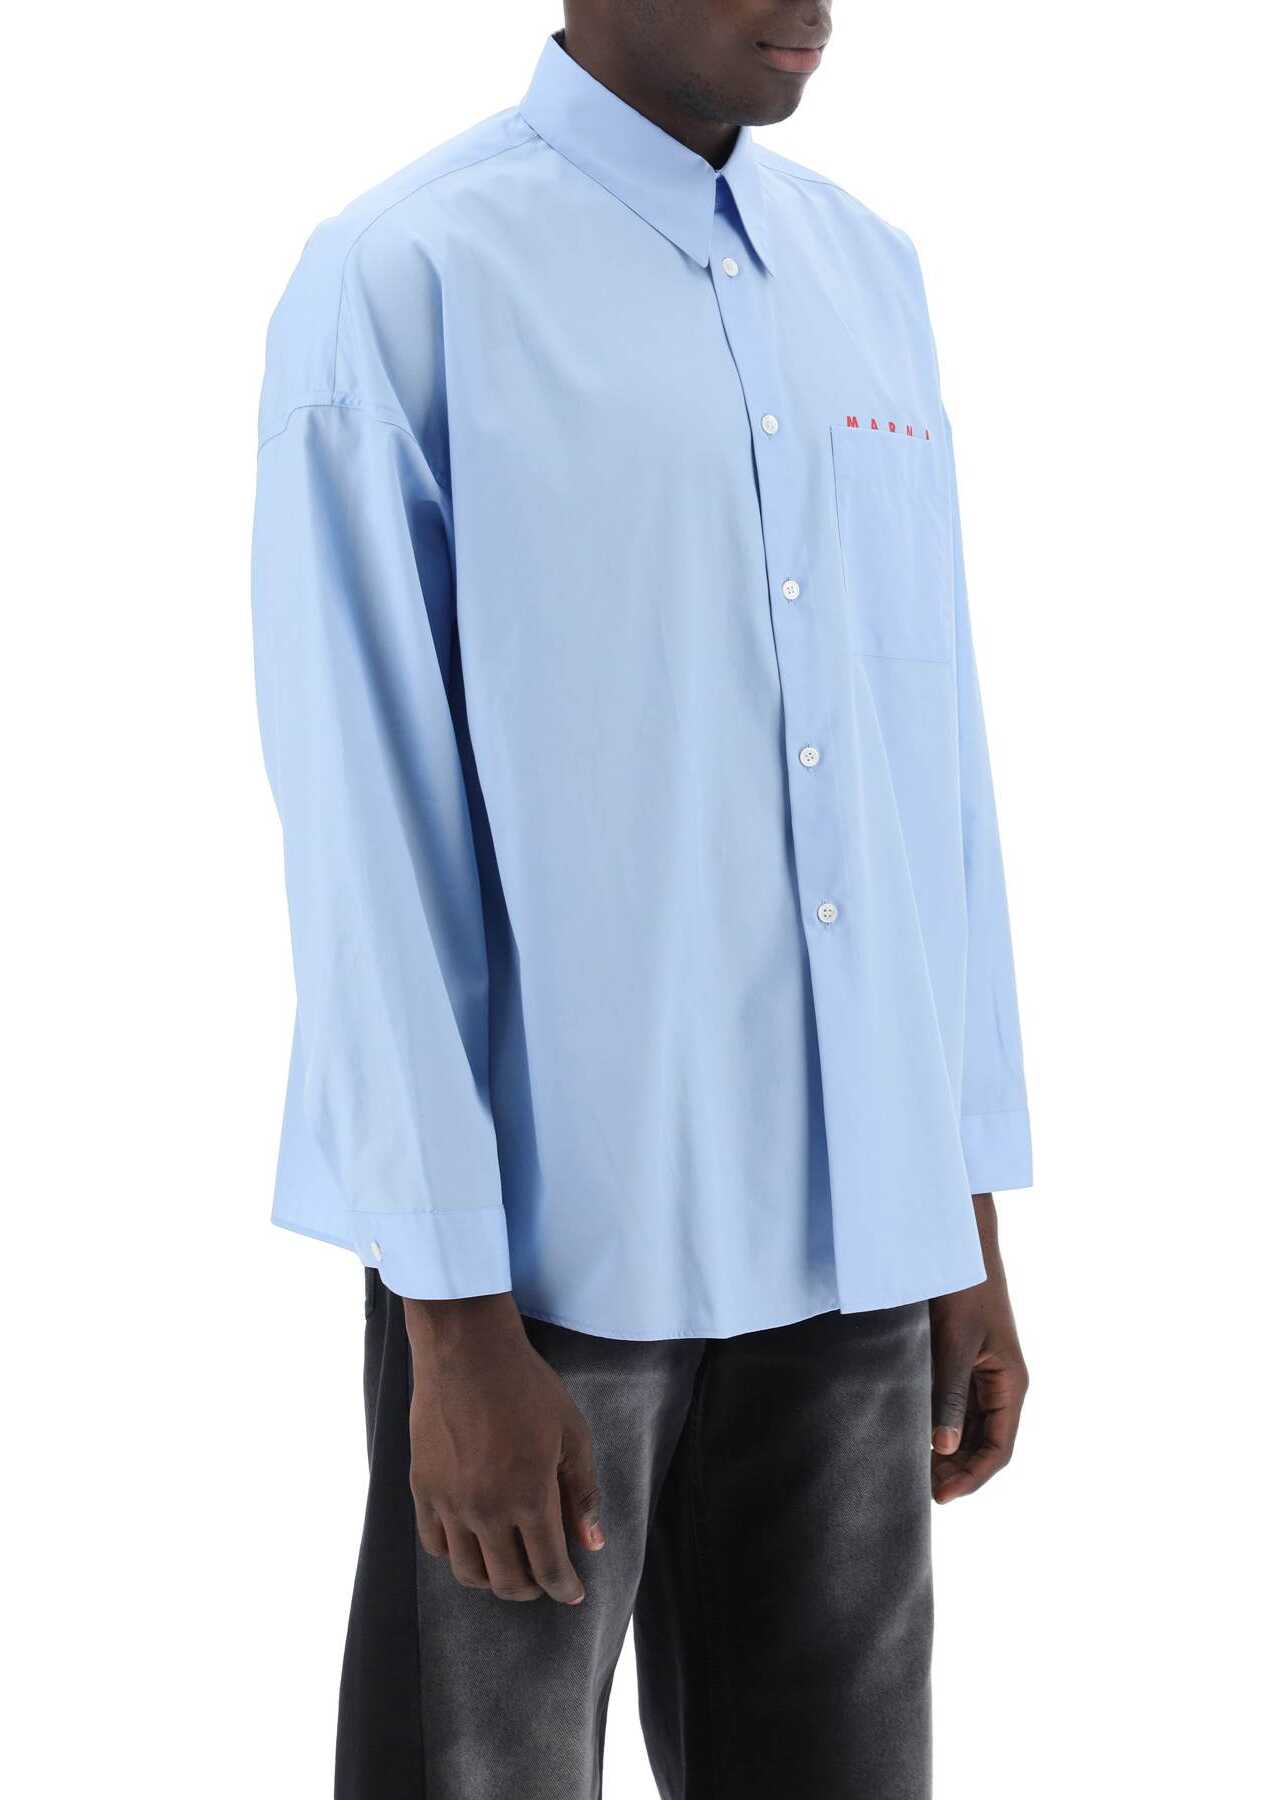 Marni Boxy Shirt With Italian Collar IRIS BLUE